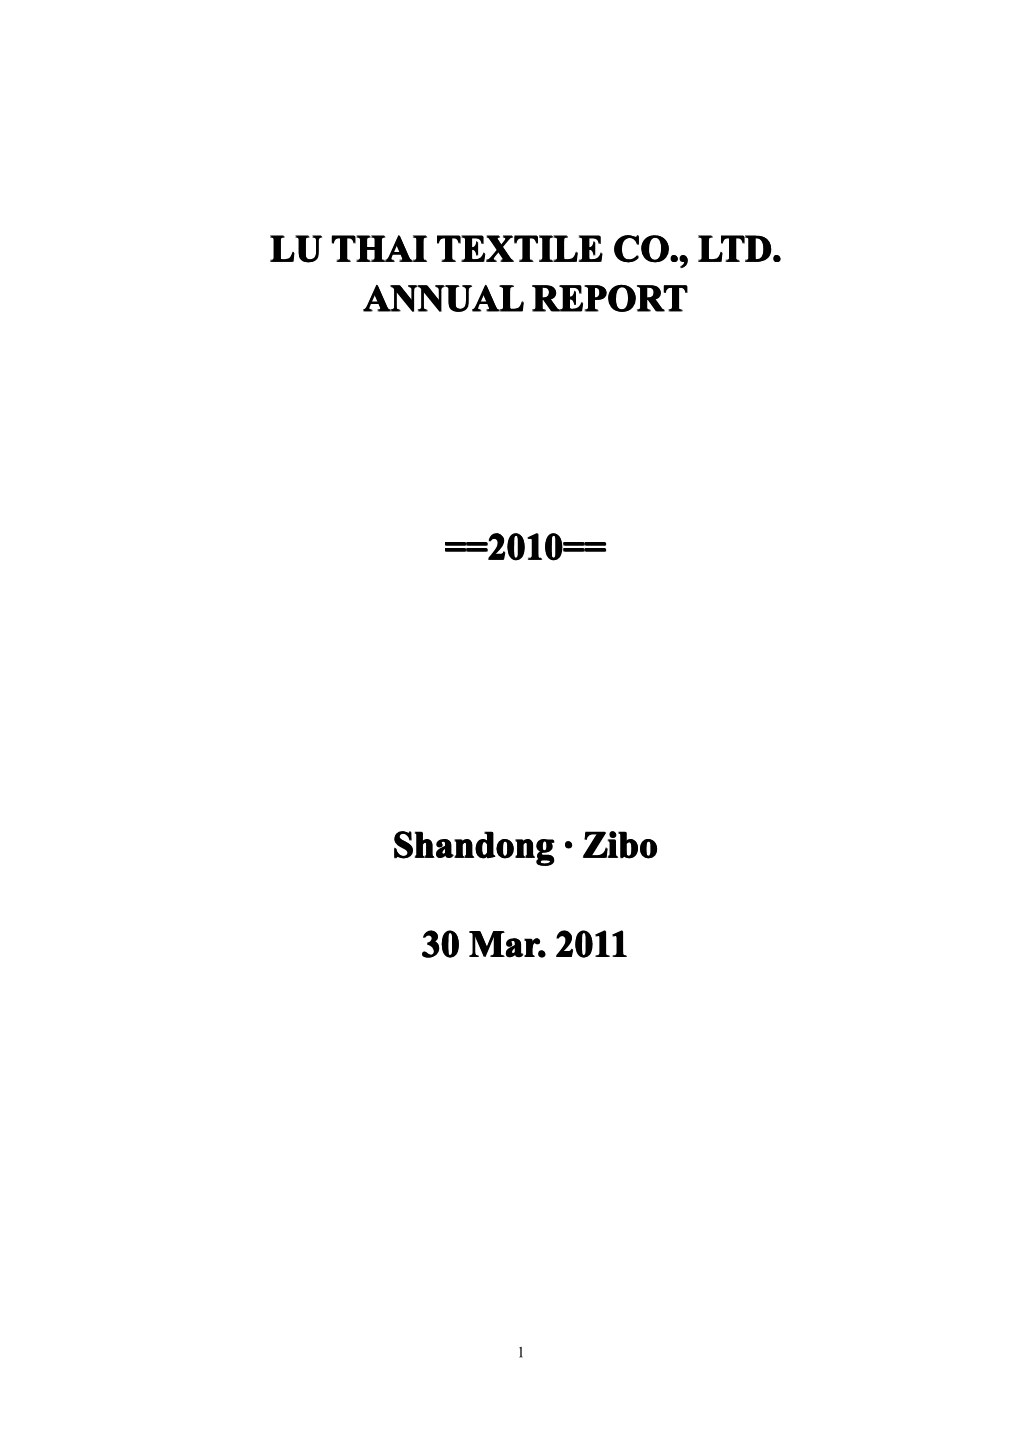 Lu Thai Textile Co., Ltd